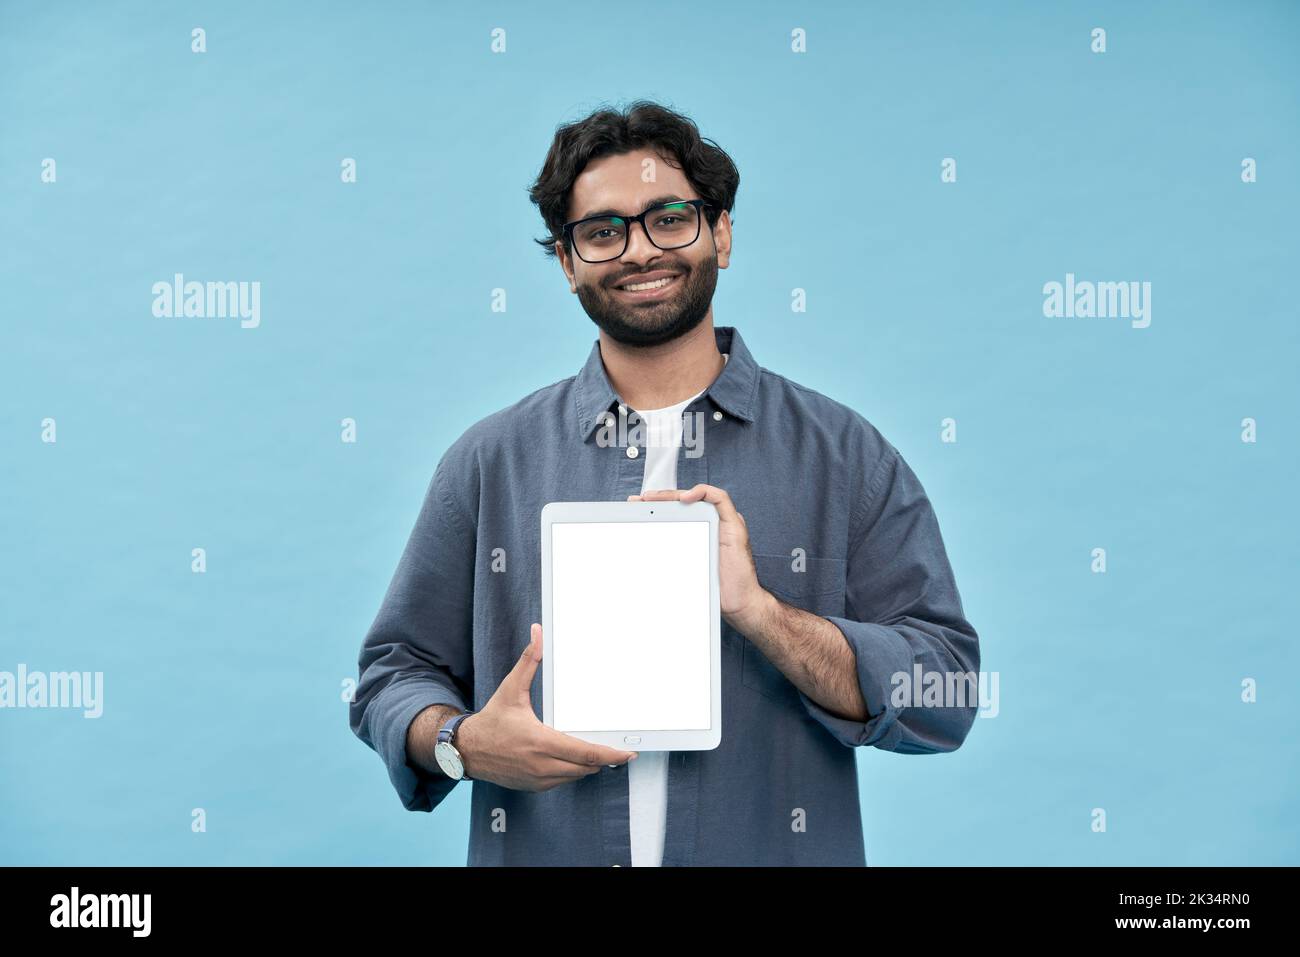 Smiling arab student showing digital tablet mockup screen presenting online ad. Stock Photo